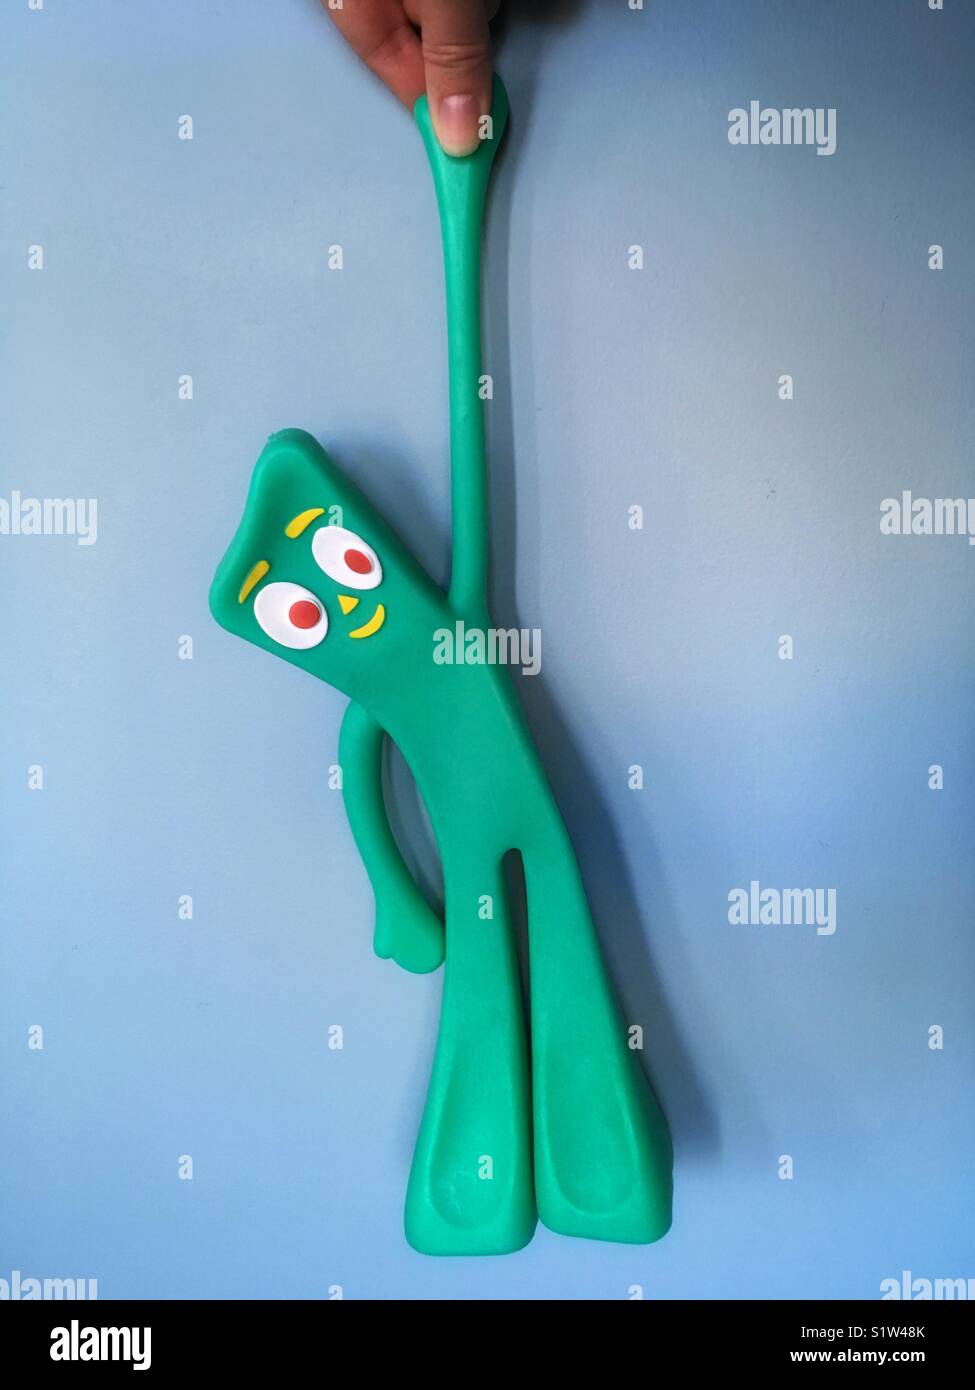 Gumby toy Stock Photo